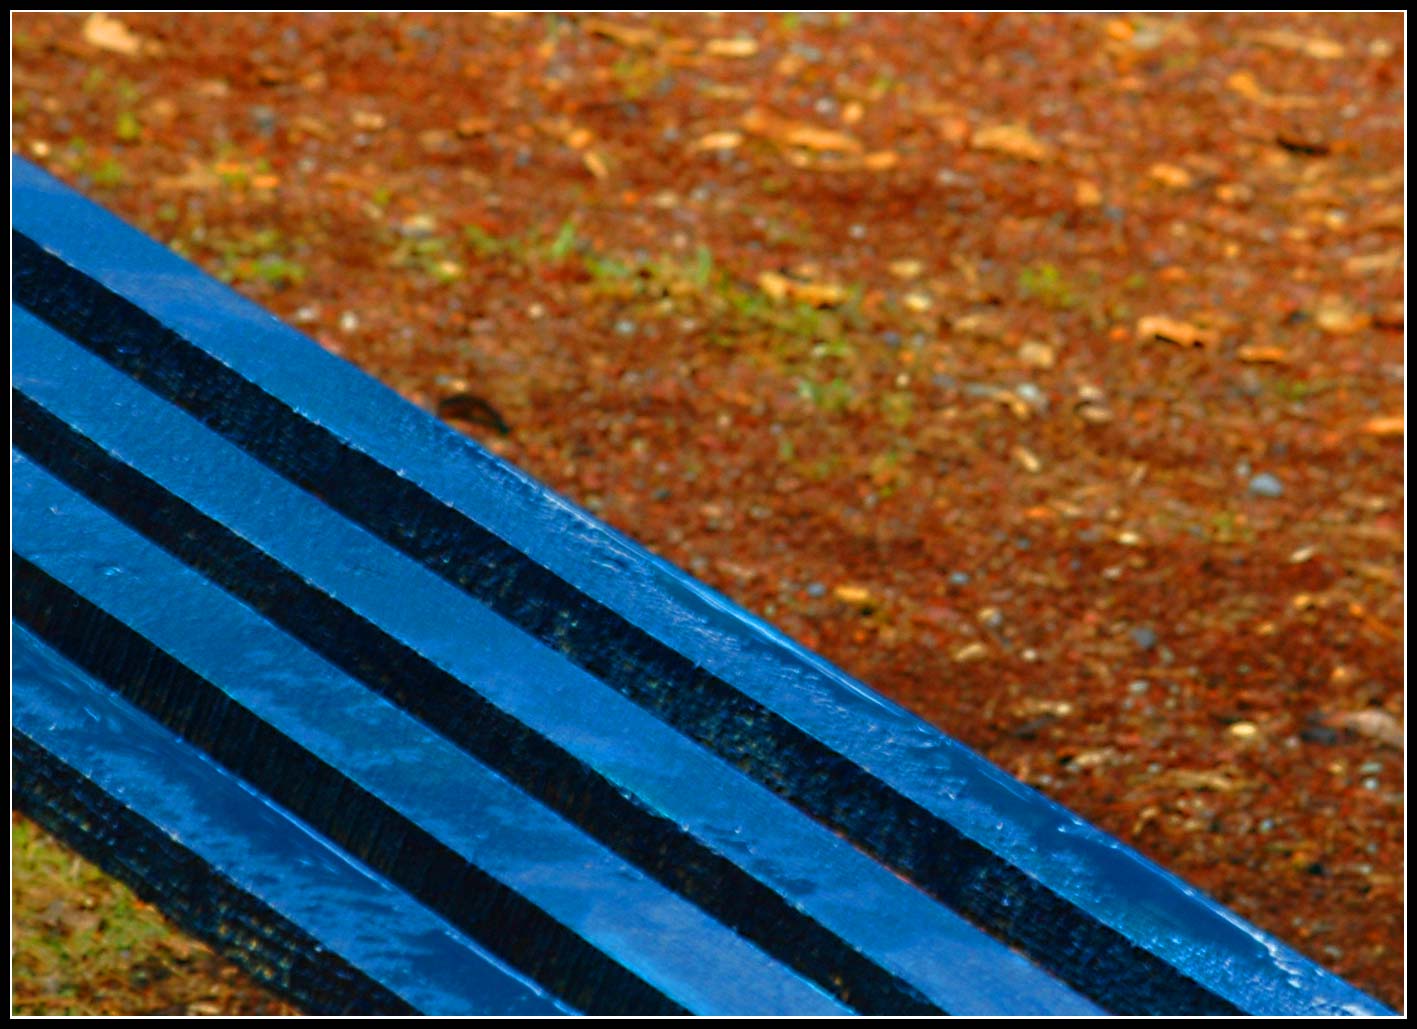 Blue bench, Bench, Blue, Contrast, Dirt, HQ Photo